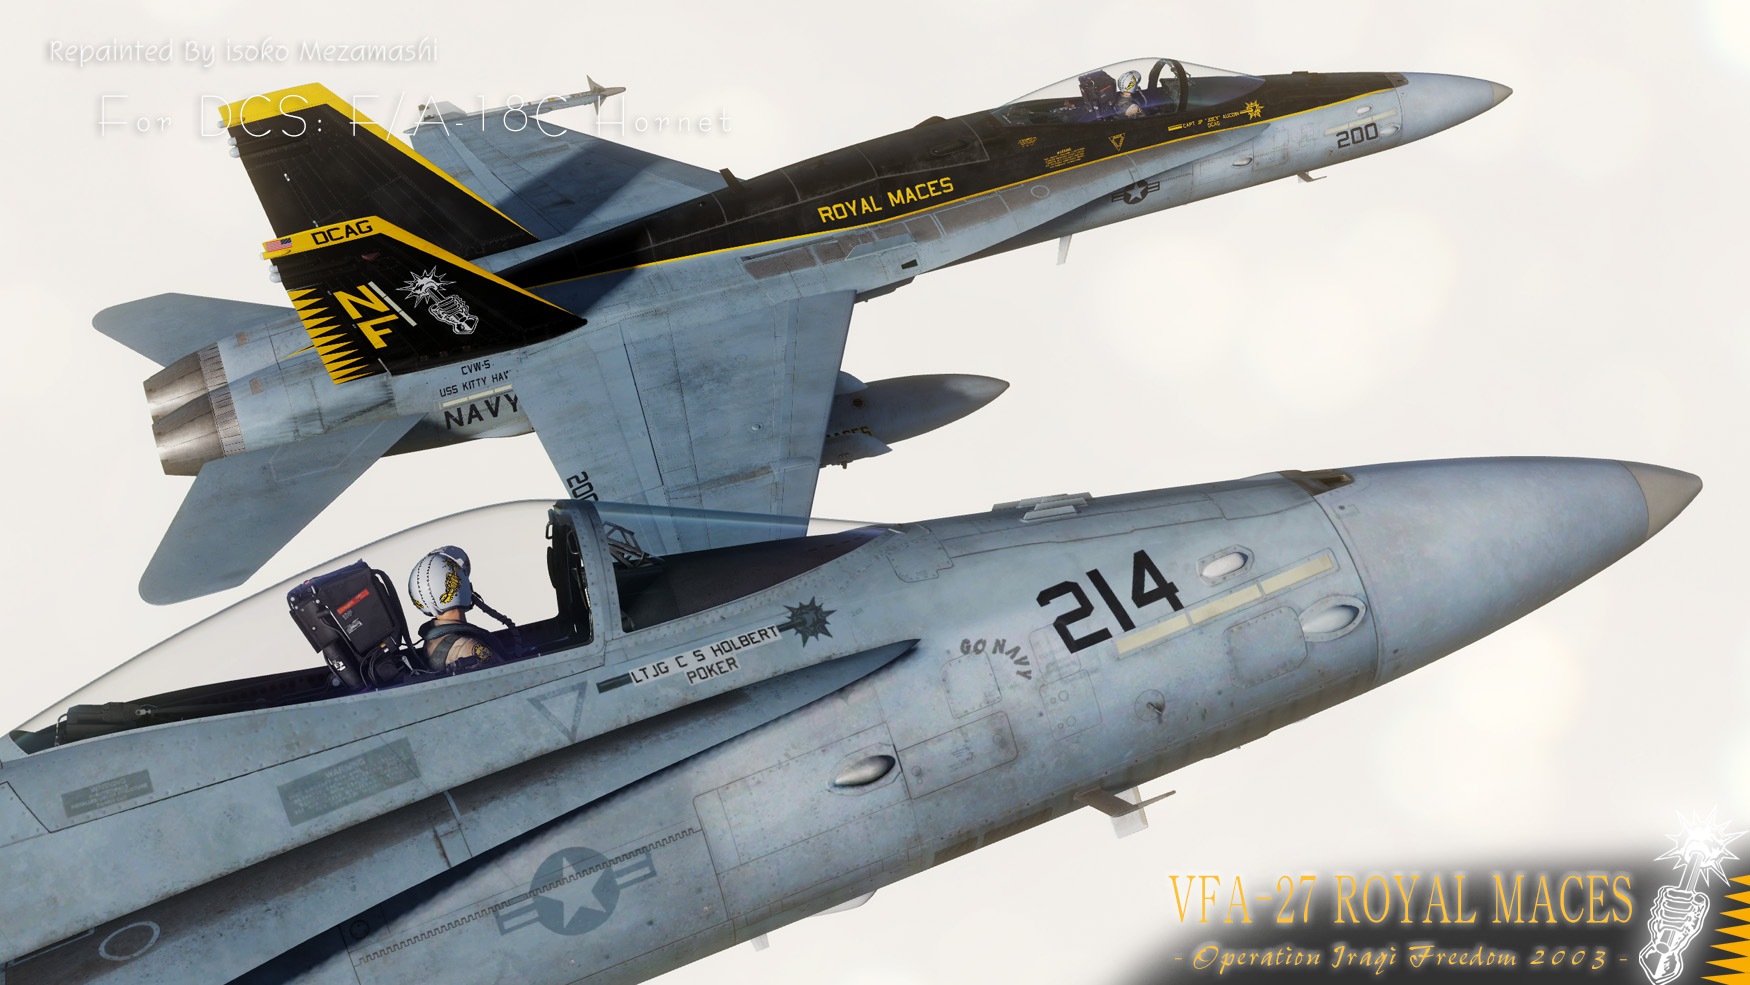 F/A-18C HORNET "VFA-27 ROYAL MACES" 2003 v1.6